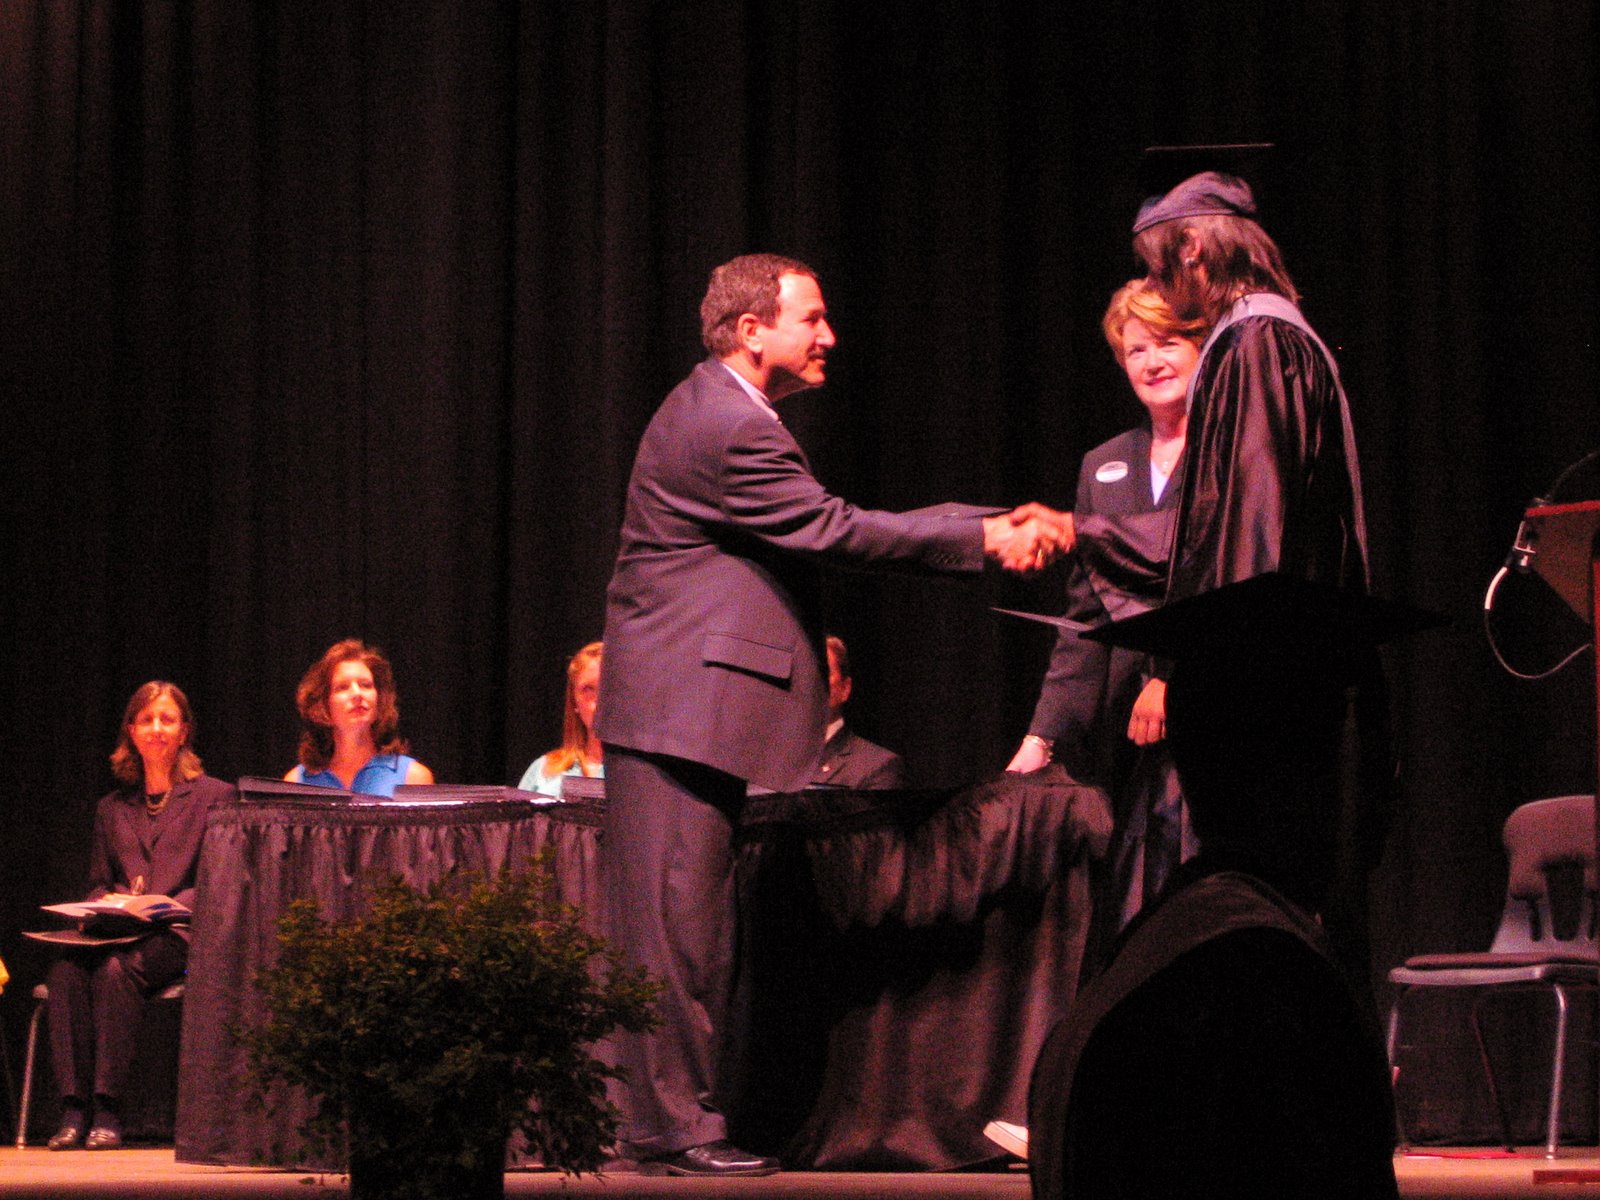 The Boy receives his diploma